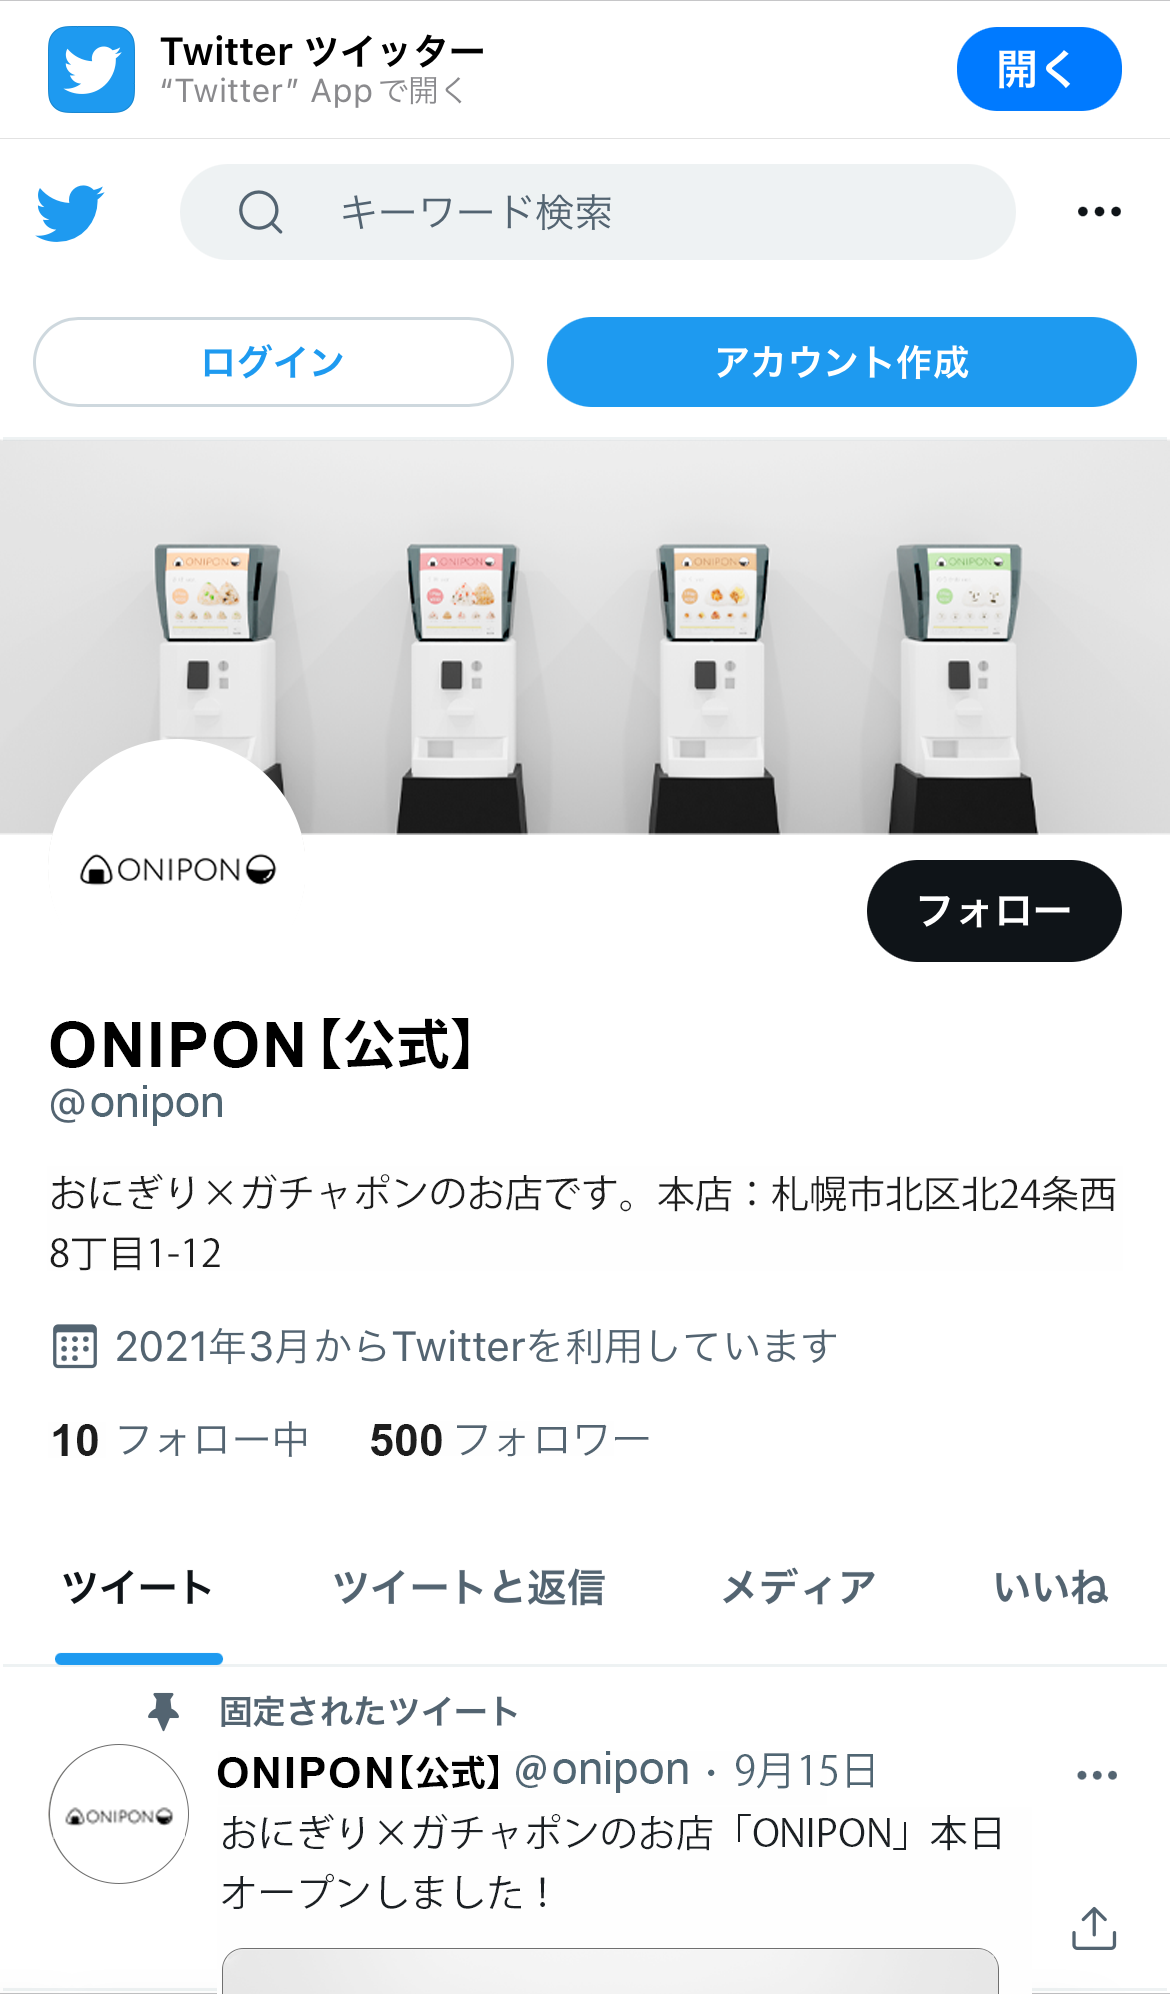 ONIPON Twitter